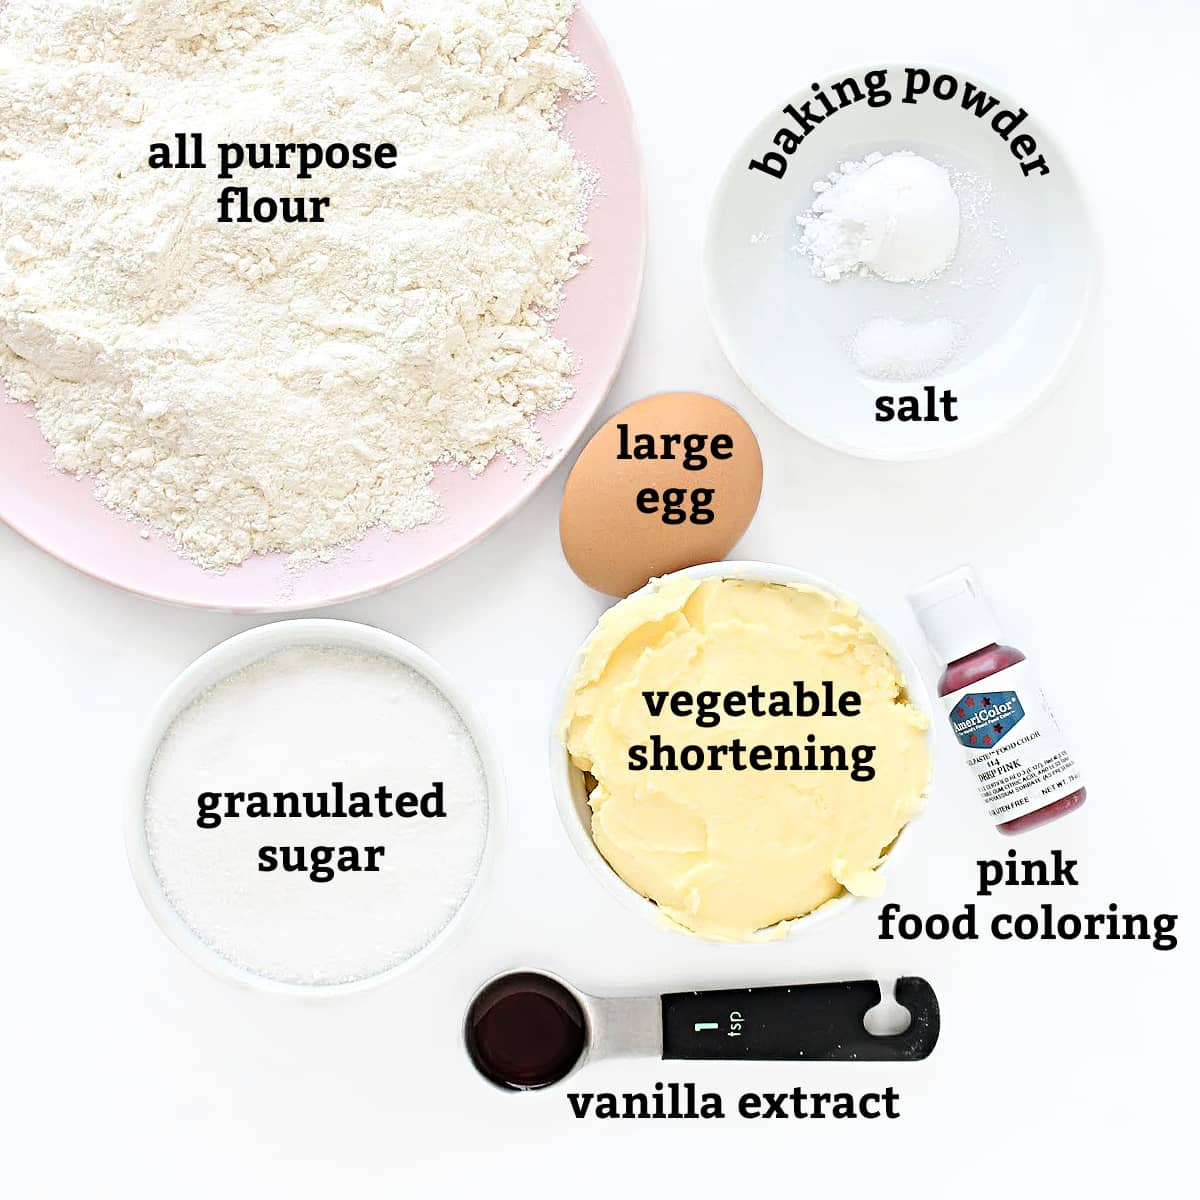 Ingredients: all purpose flour, baking powder, salt, egg, sugar, vegetable shortening, pink food coloring, vanilla extract.